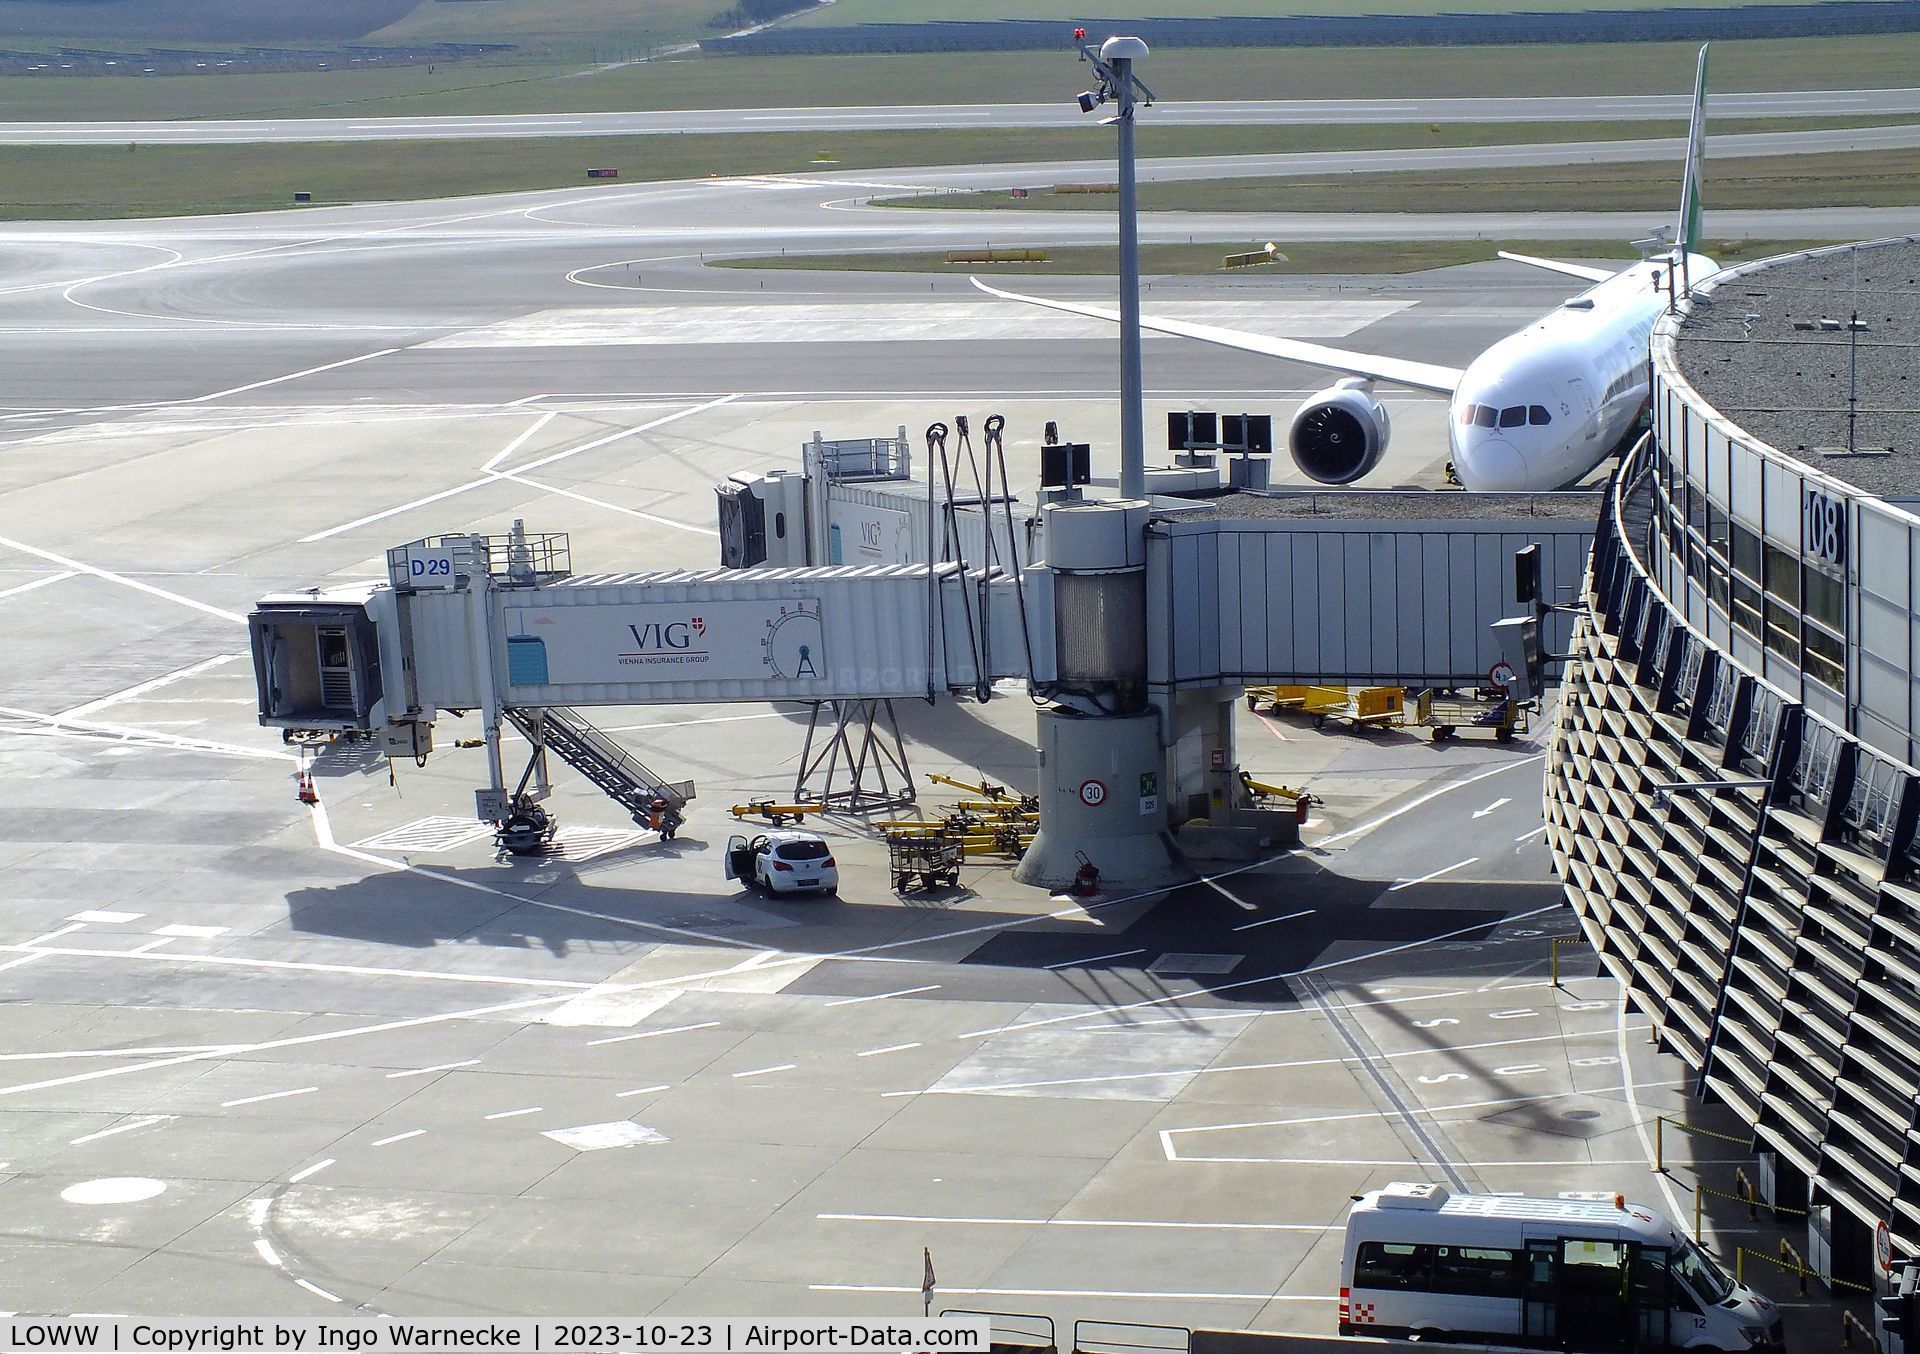 Vienna International Airport, Vienna Austria (LOWW) - boarding bridges at gates building D at Wien airport